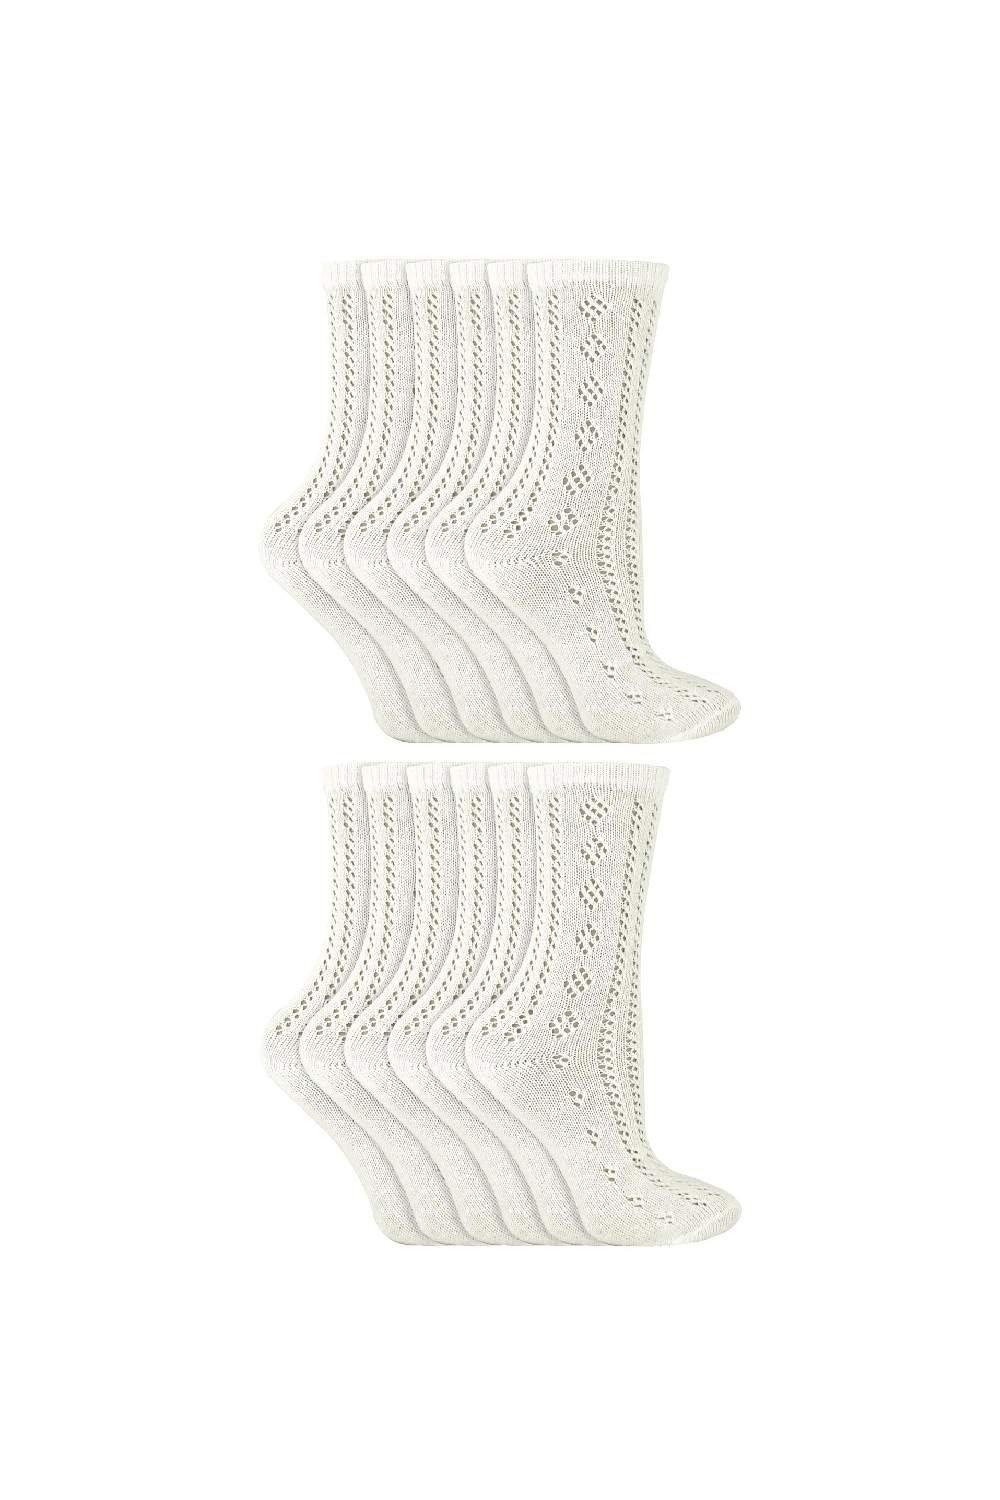 12 Pair Pelerine Ankle Socks - Cotton Knitted School Socks